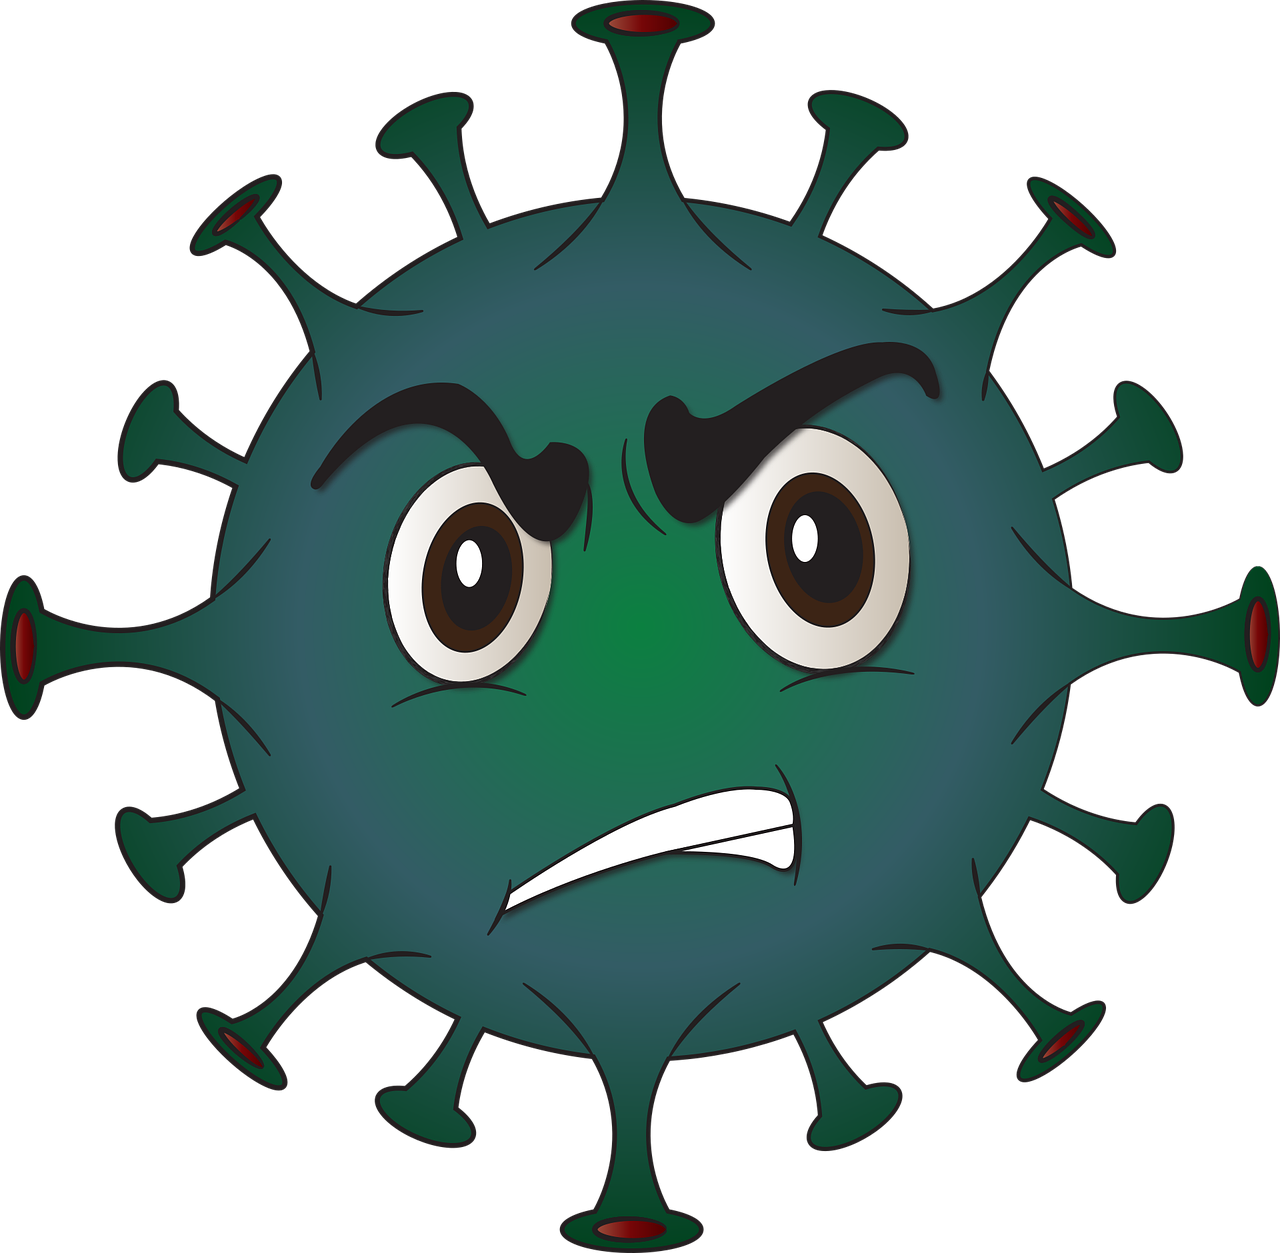 Картинка вируса для детей. Бактерия Covid-19. Коронавирус бактерия вектор. Вирус микробы коронавирус. Коронавирус бактерия.